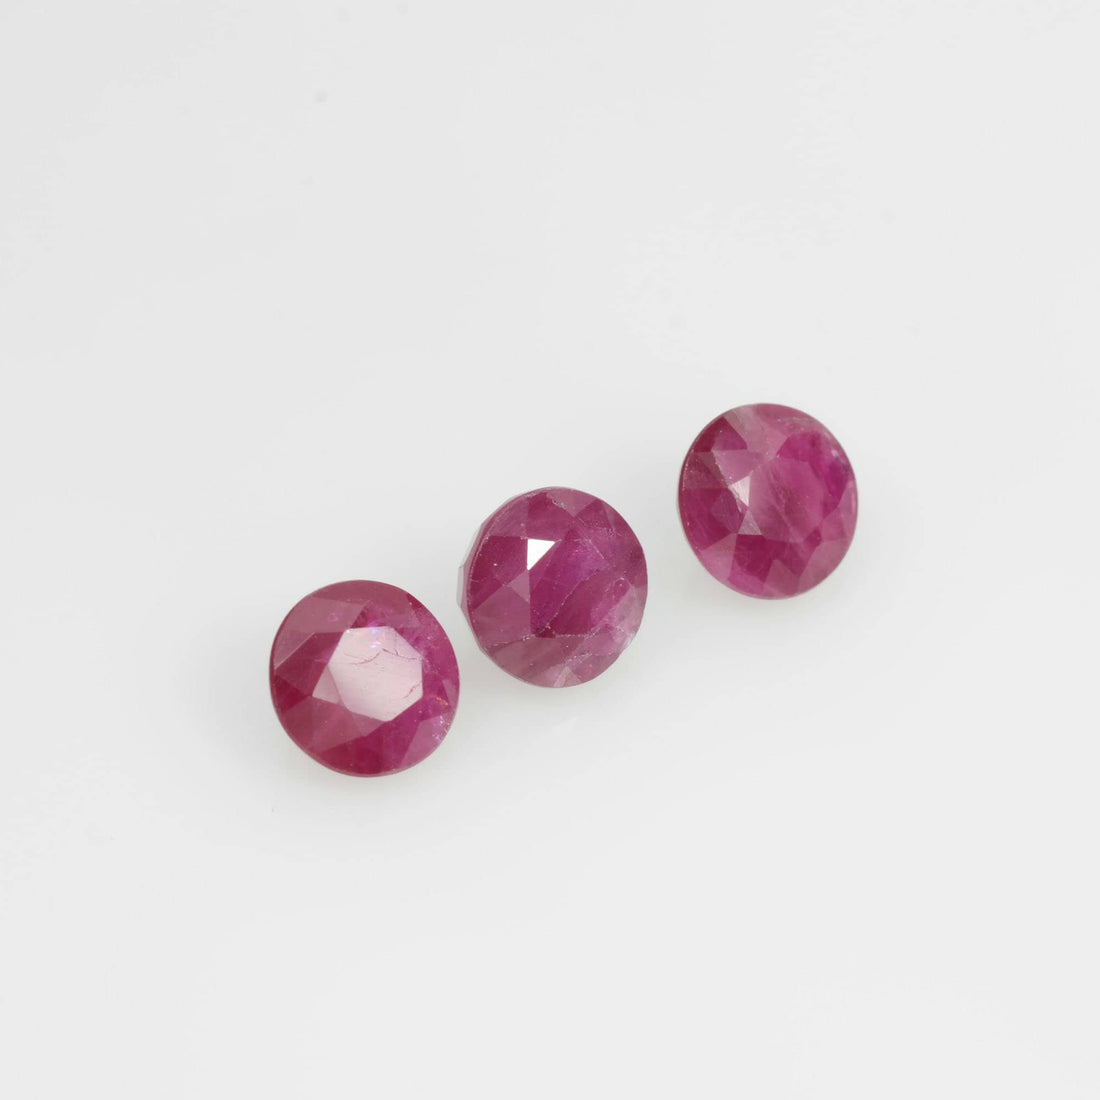 4.1-5.5 mm Natural Ruby Loose Gemstone Round Cut